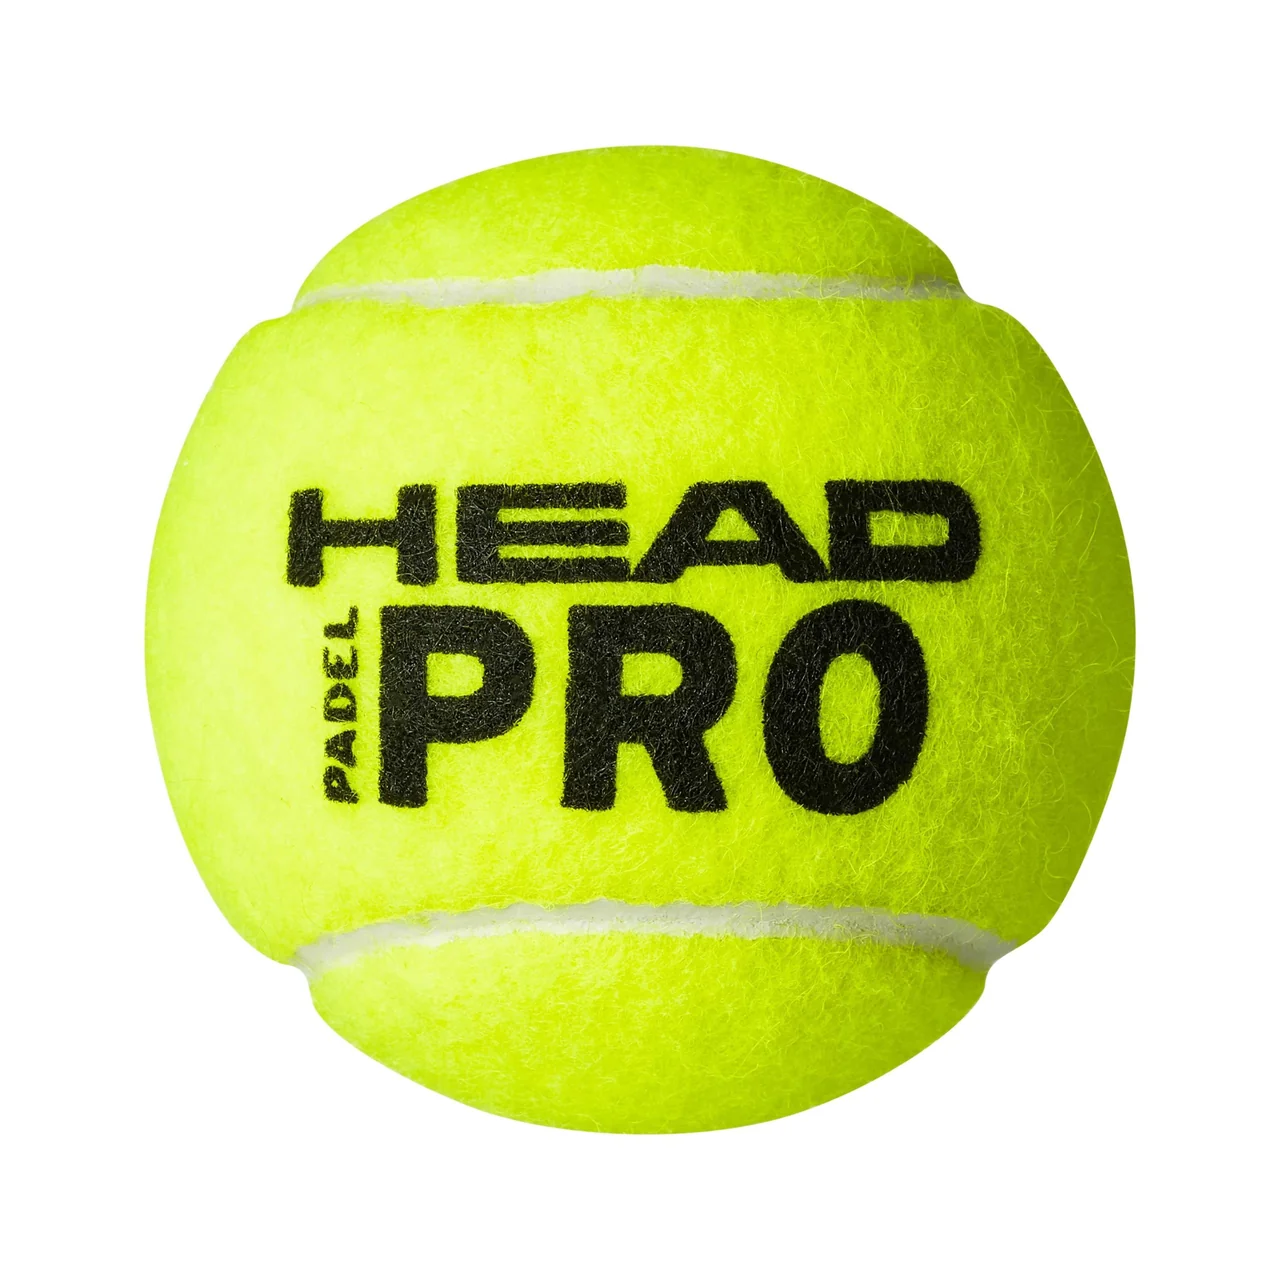 Head Padel Pro Ball 3 rør